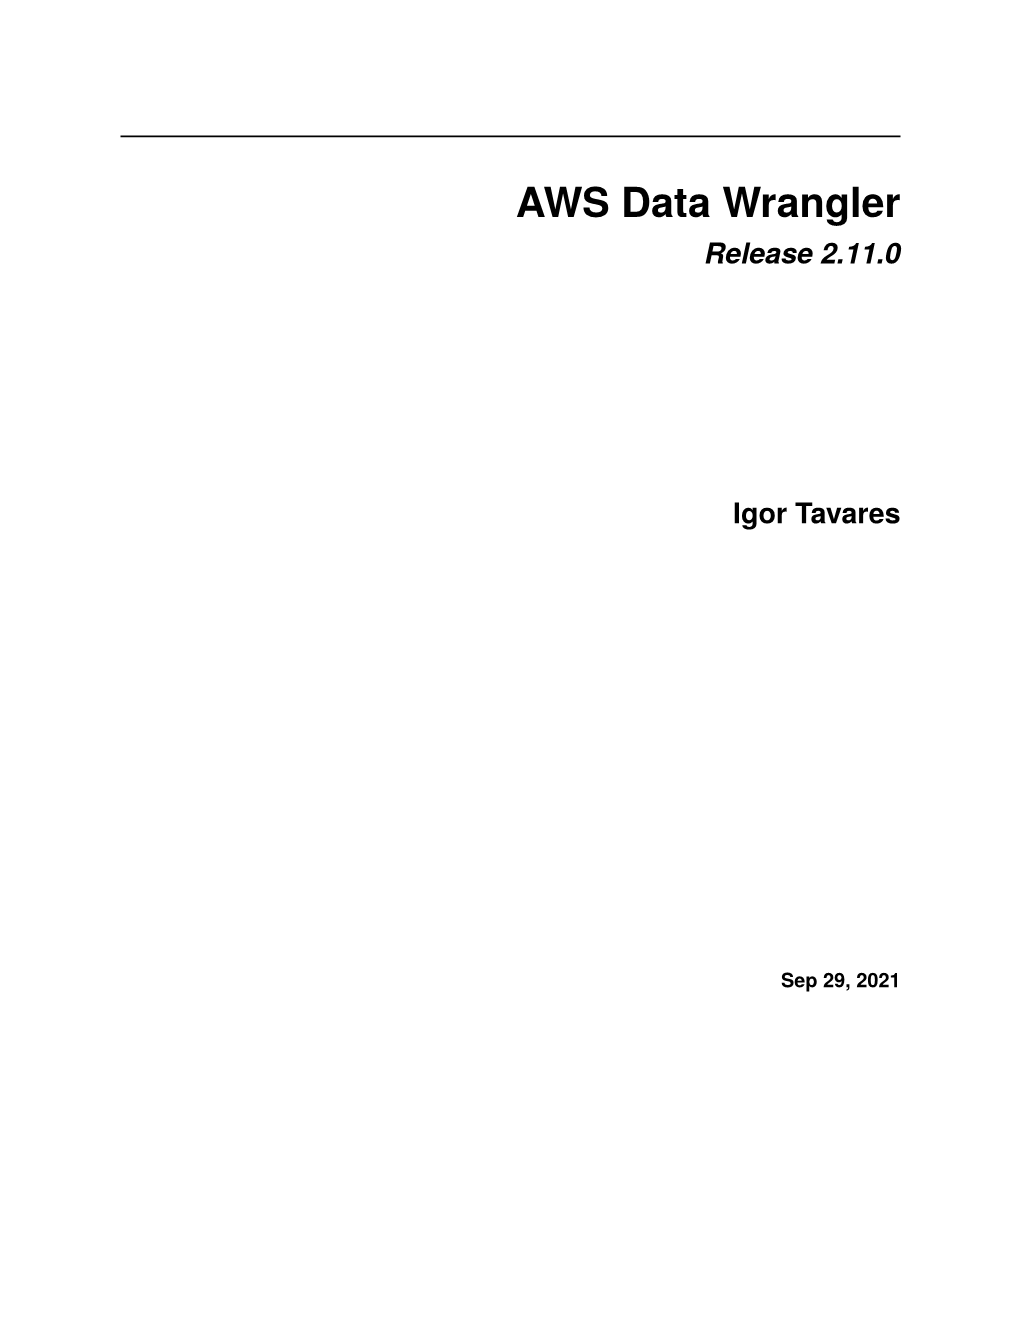 AWS Data Wrangler Release 2.11.0